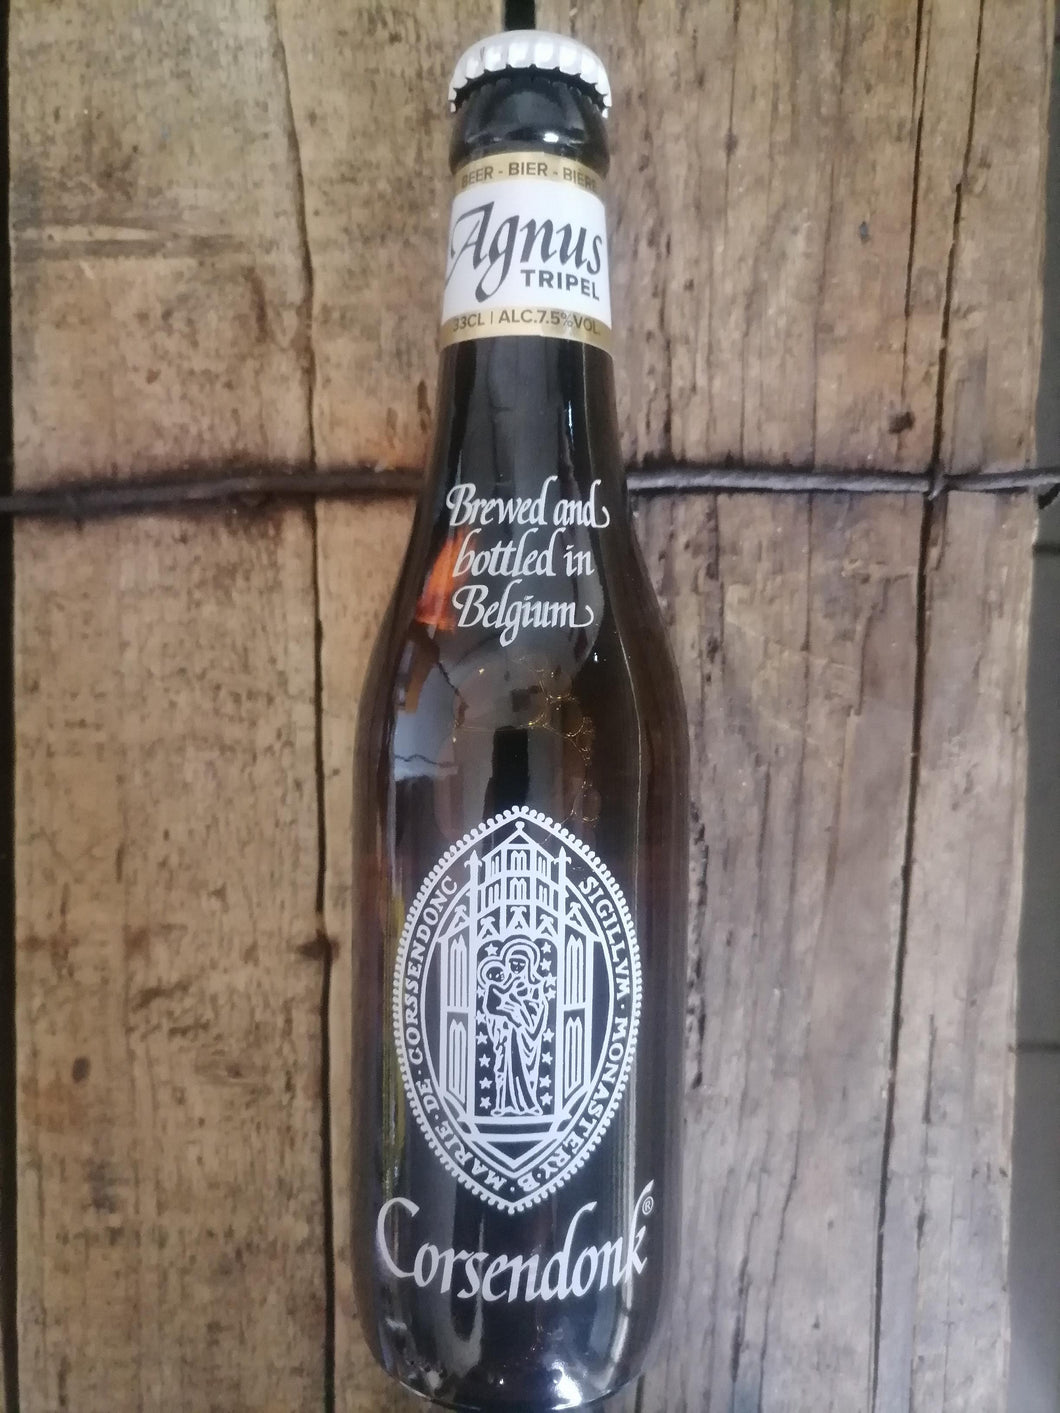 Corsendonk Agnus Tripel 7.5% (330ml bottle)